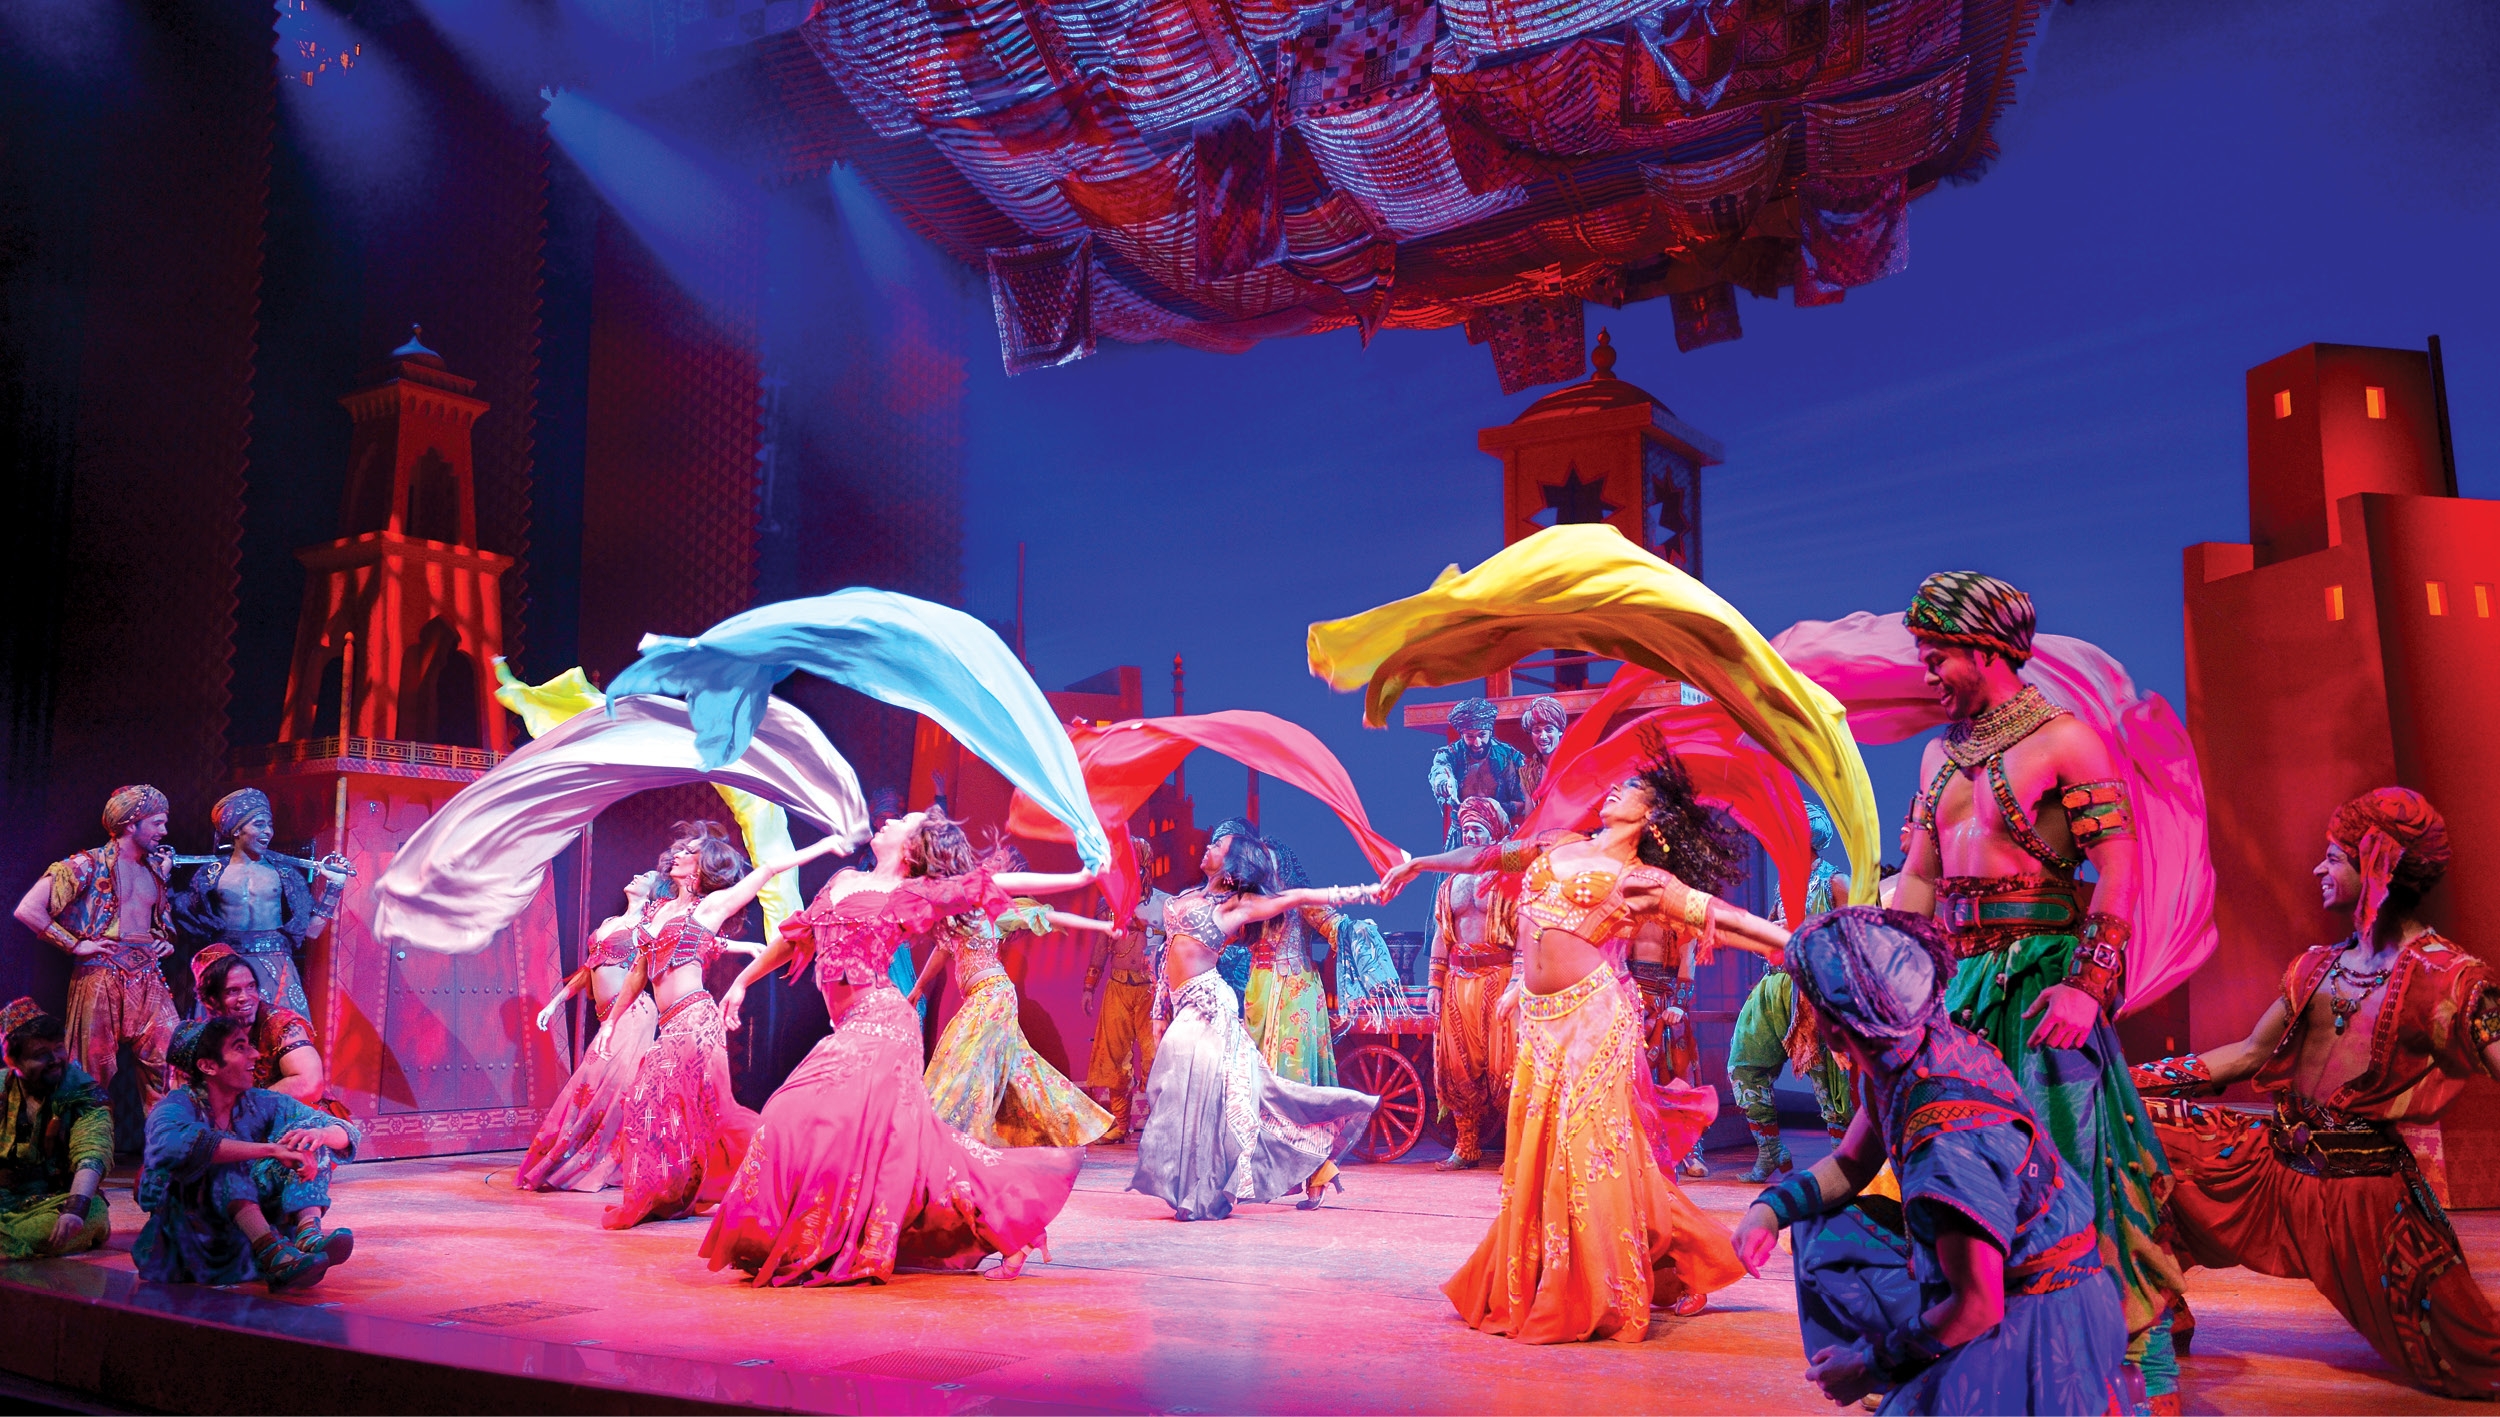 Disney's Aladdin: Bringing Magic to the Stage